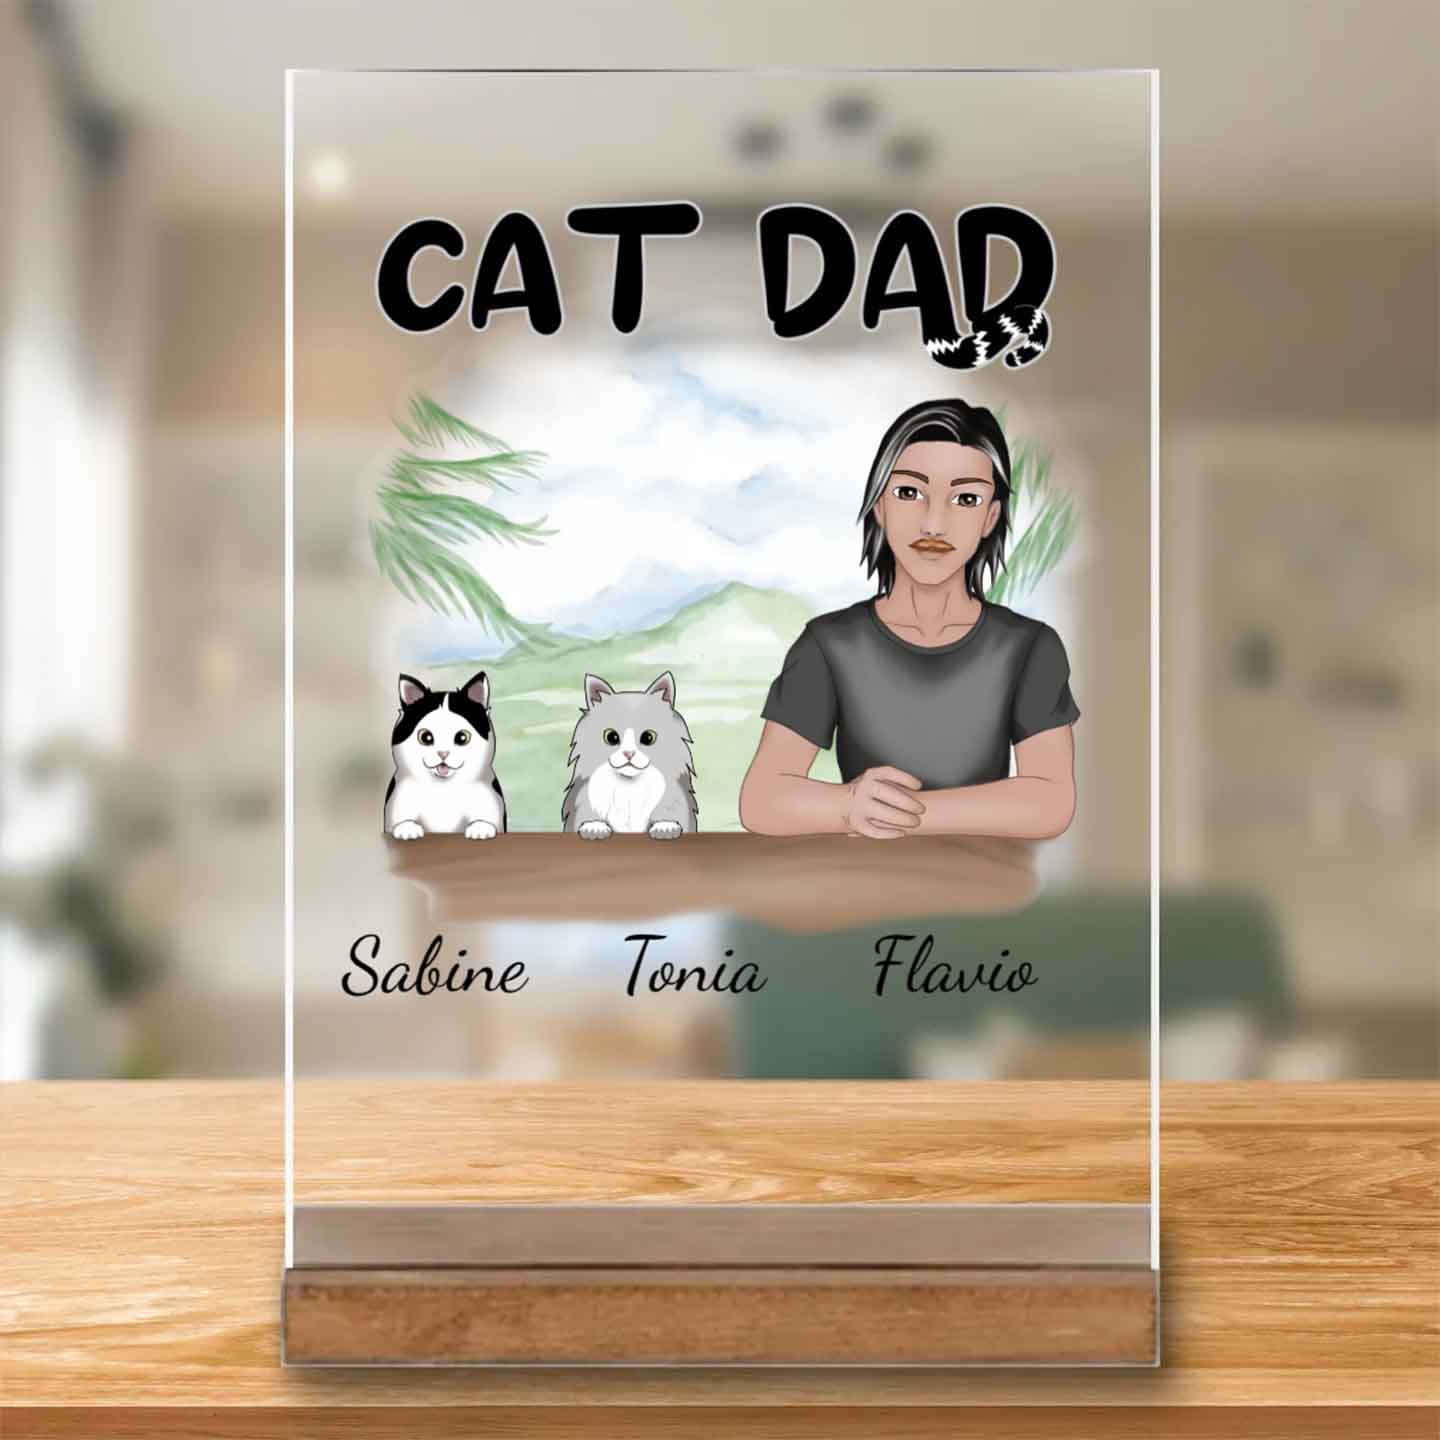 Cat dad - Produktbild - Acryl Adventure